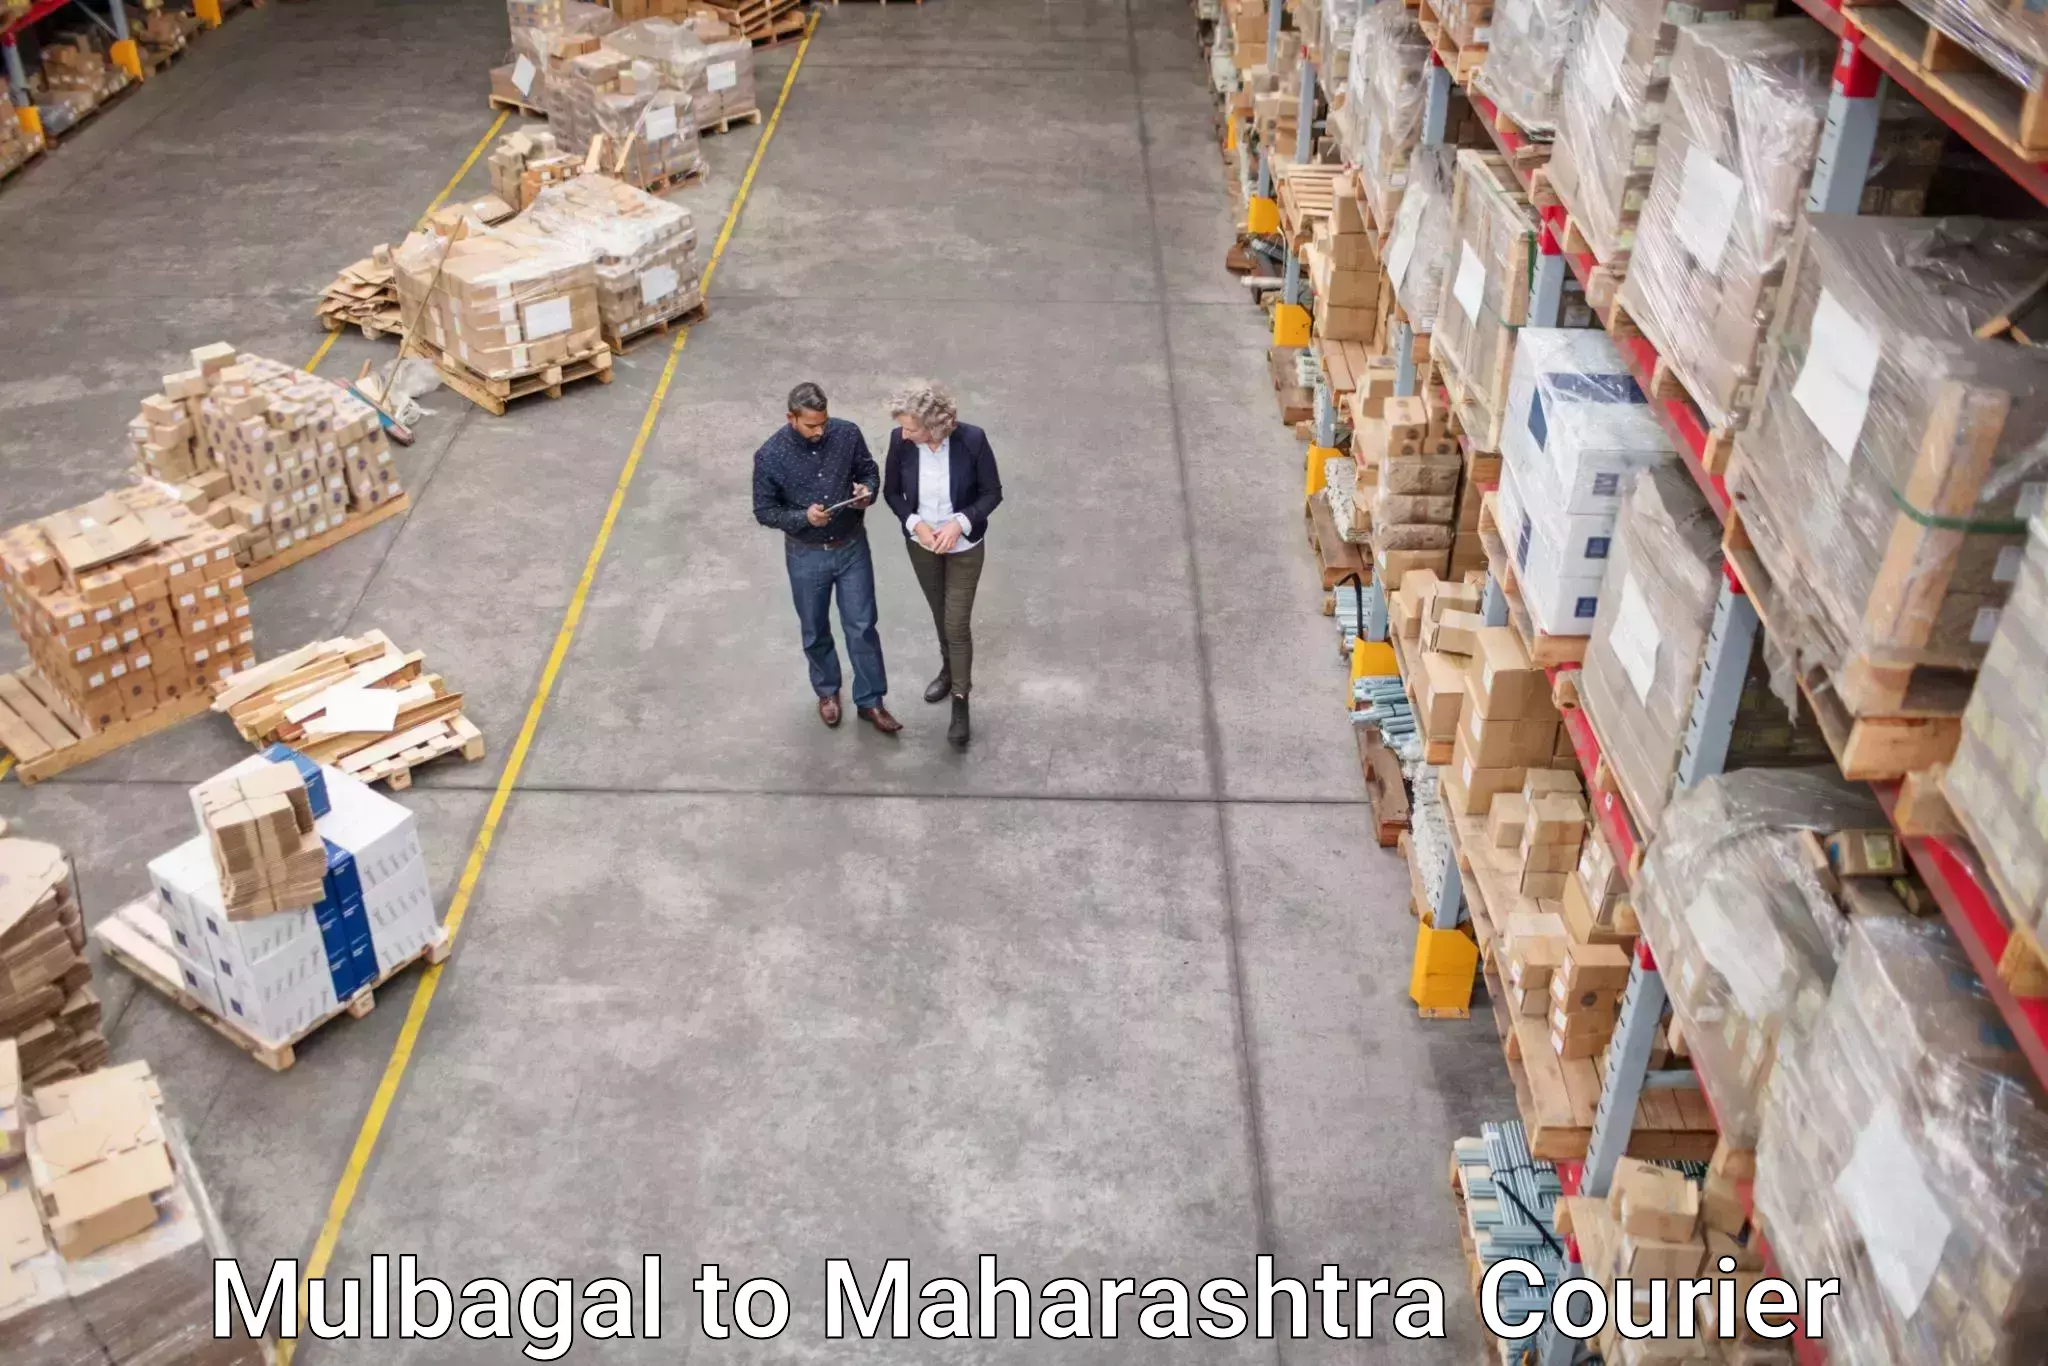 Digital courier platforms Mulbagal to Ambarnath